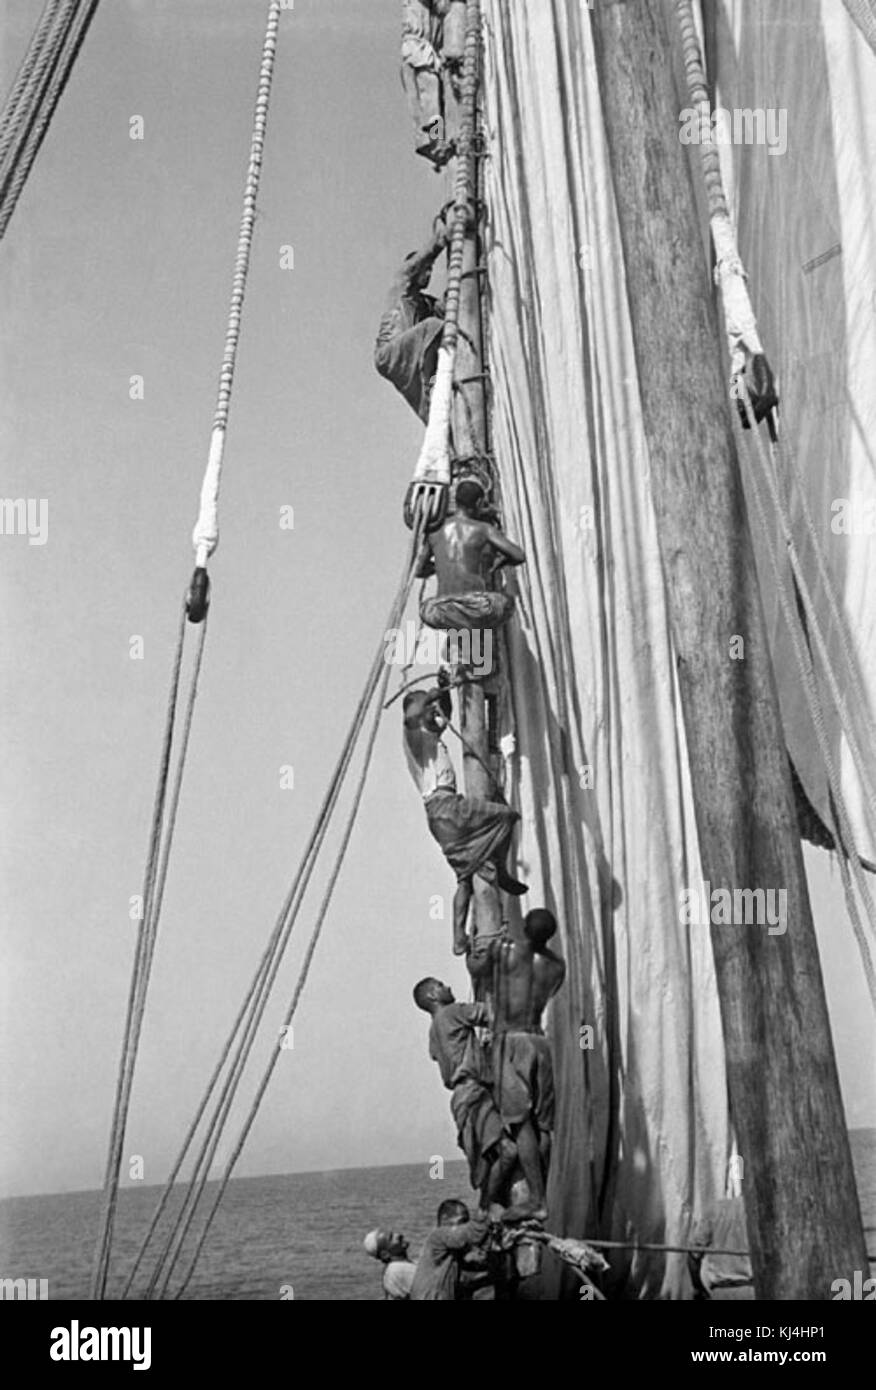 Dhow - crew climbing aloft on a mast Stock Photo